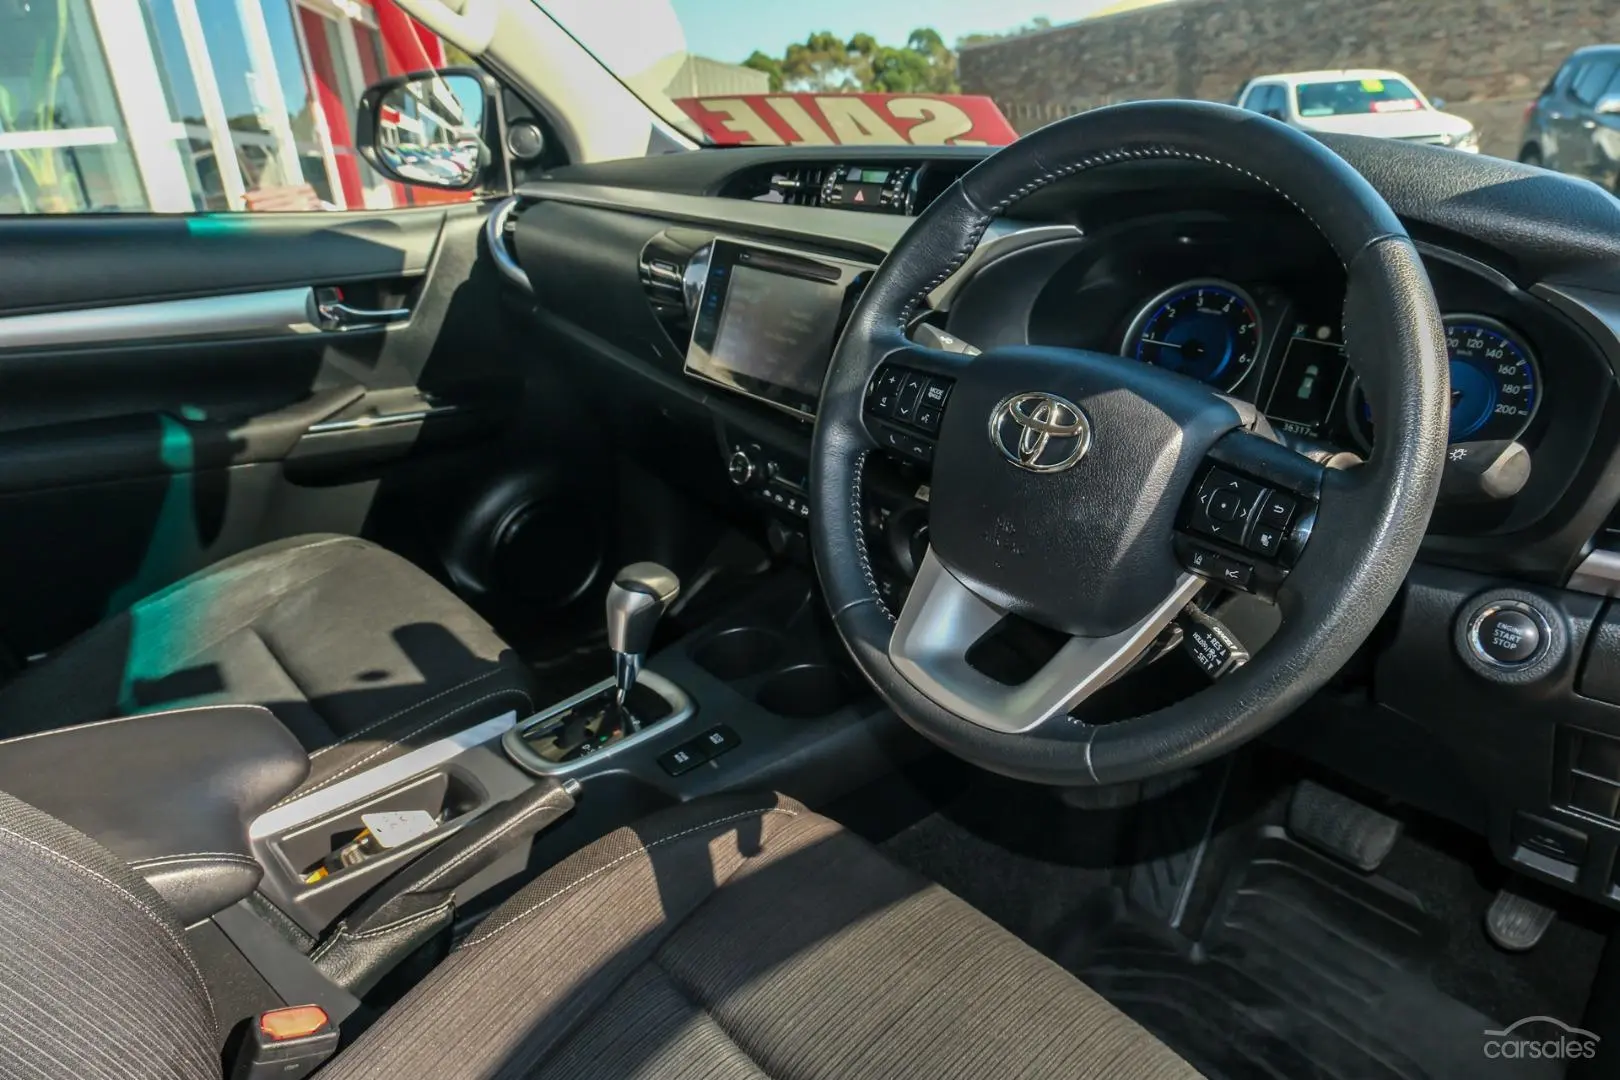 2019 Toyota Hilux Image 7